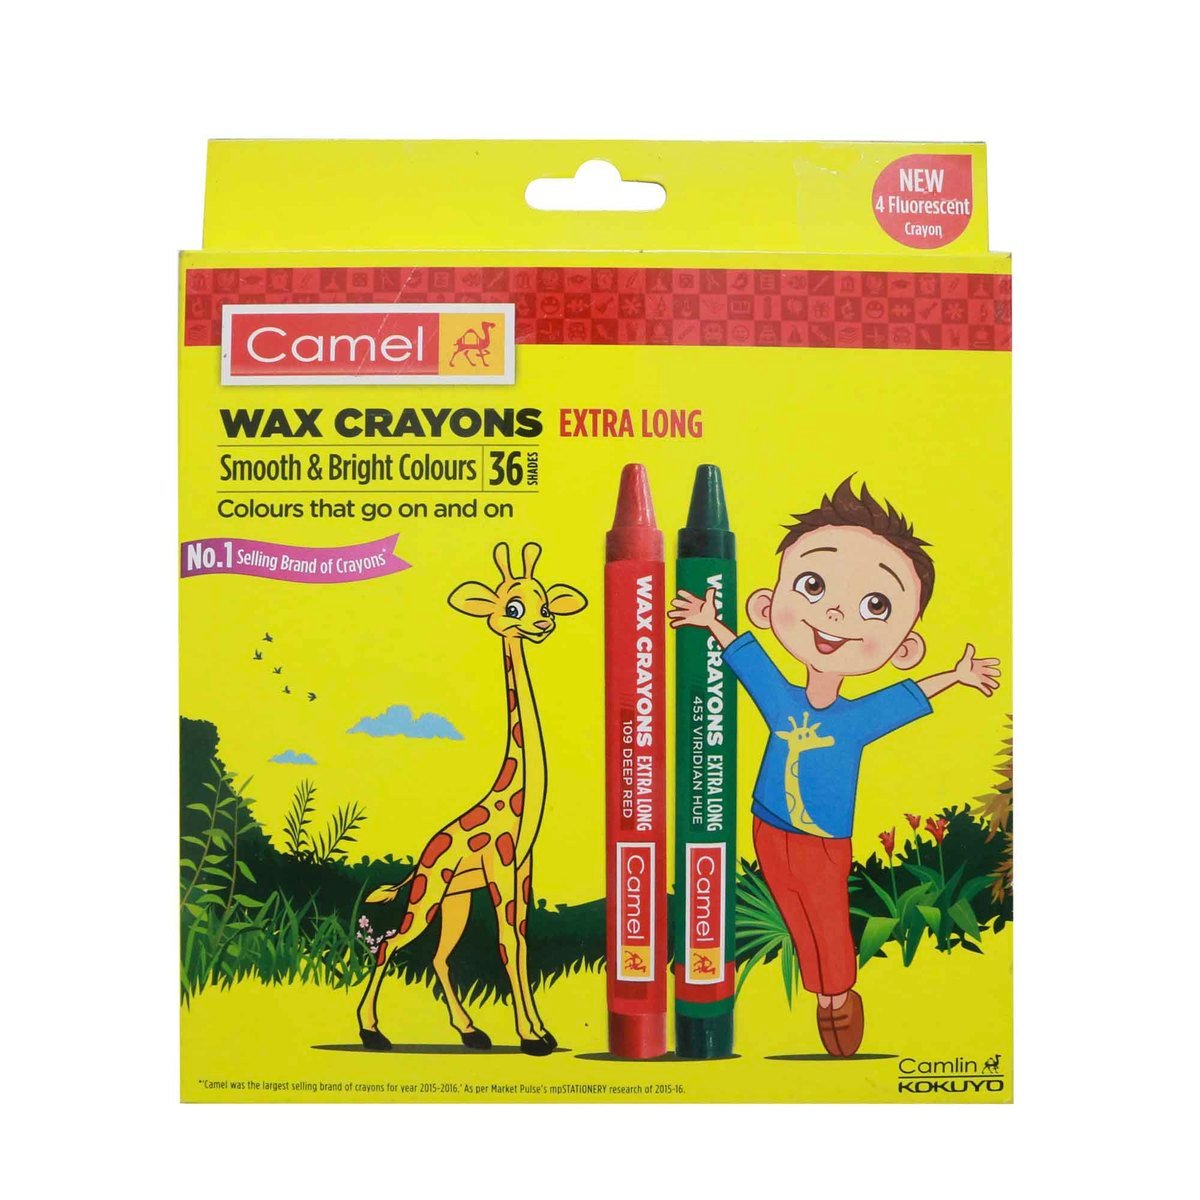 Camel Wax Crayons Extralong 36pcs